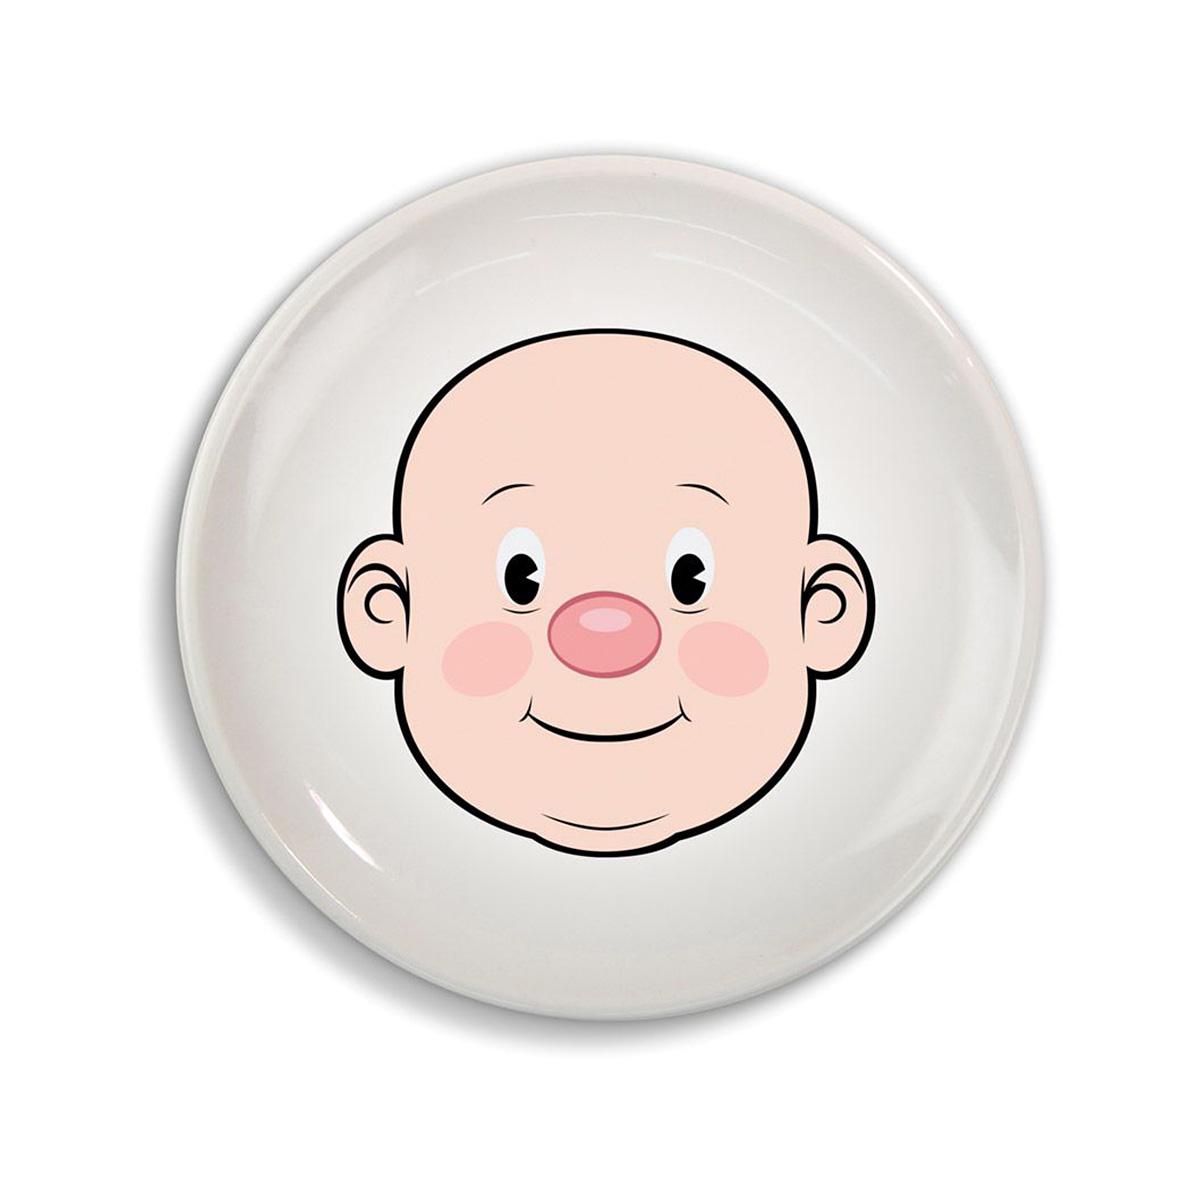  Boy Food Face Plate